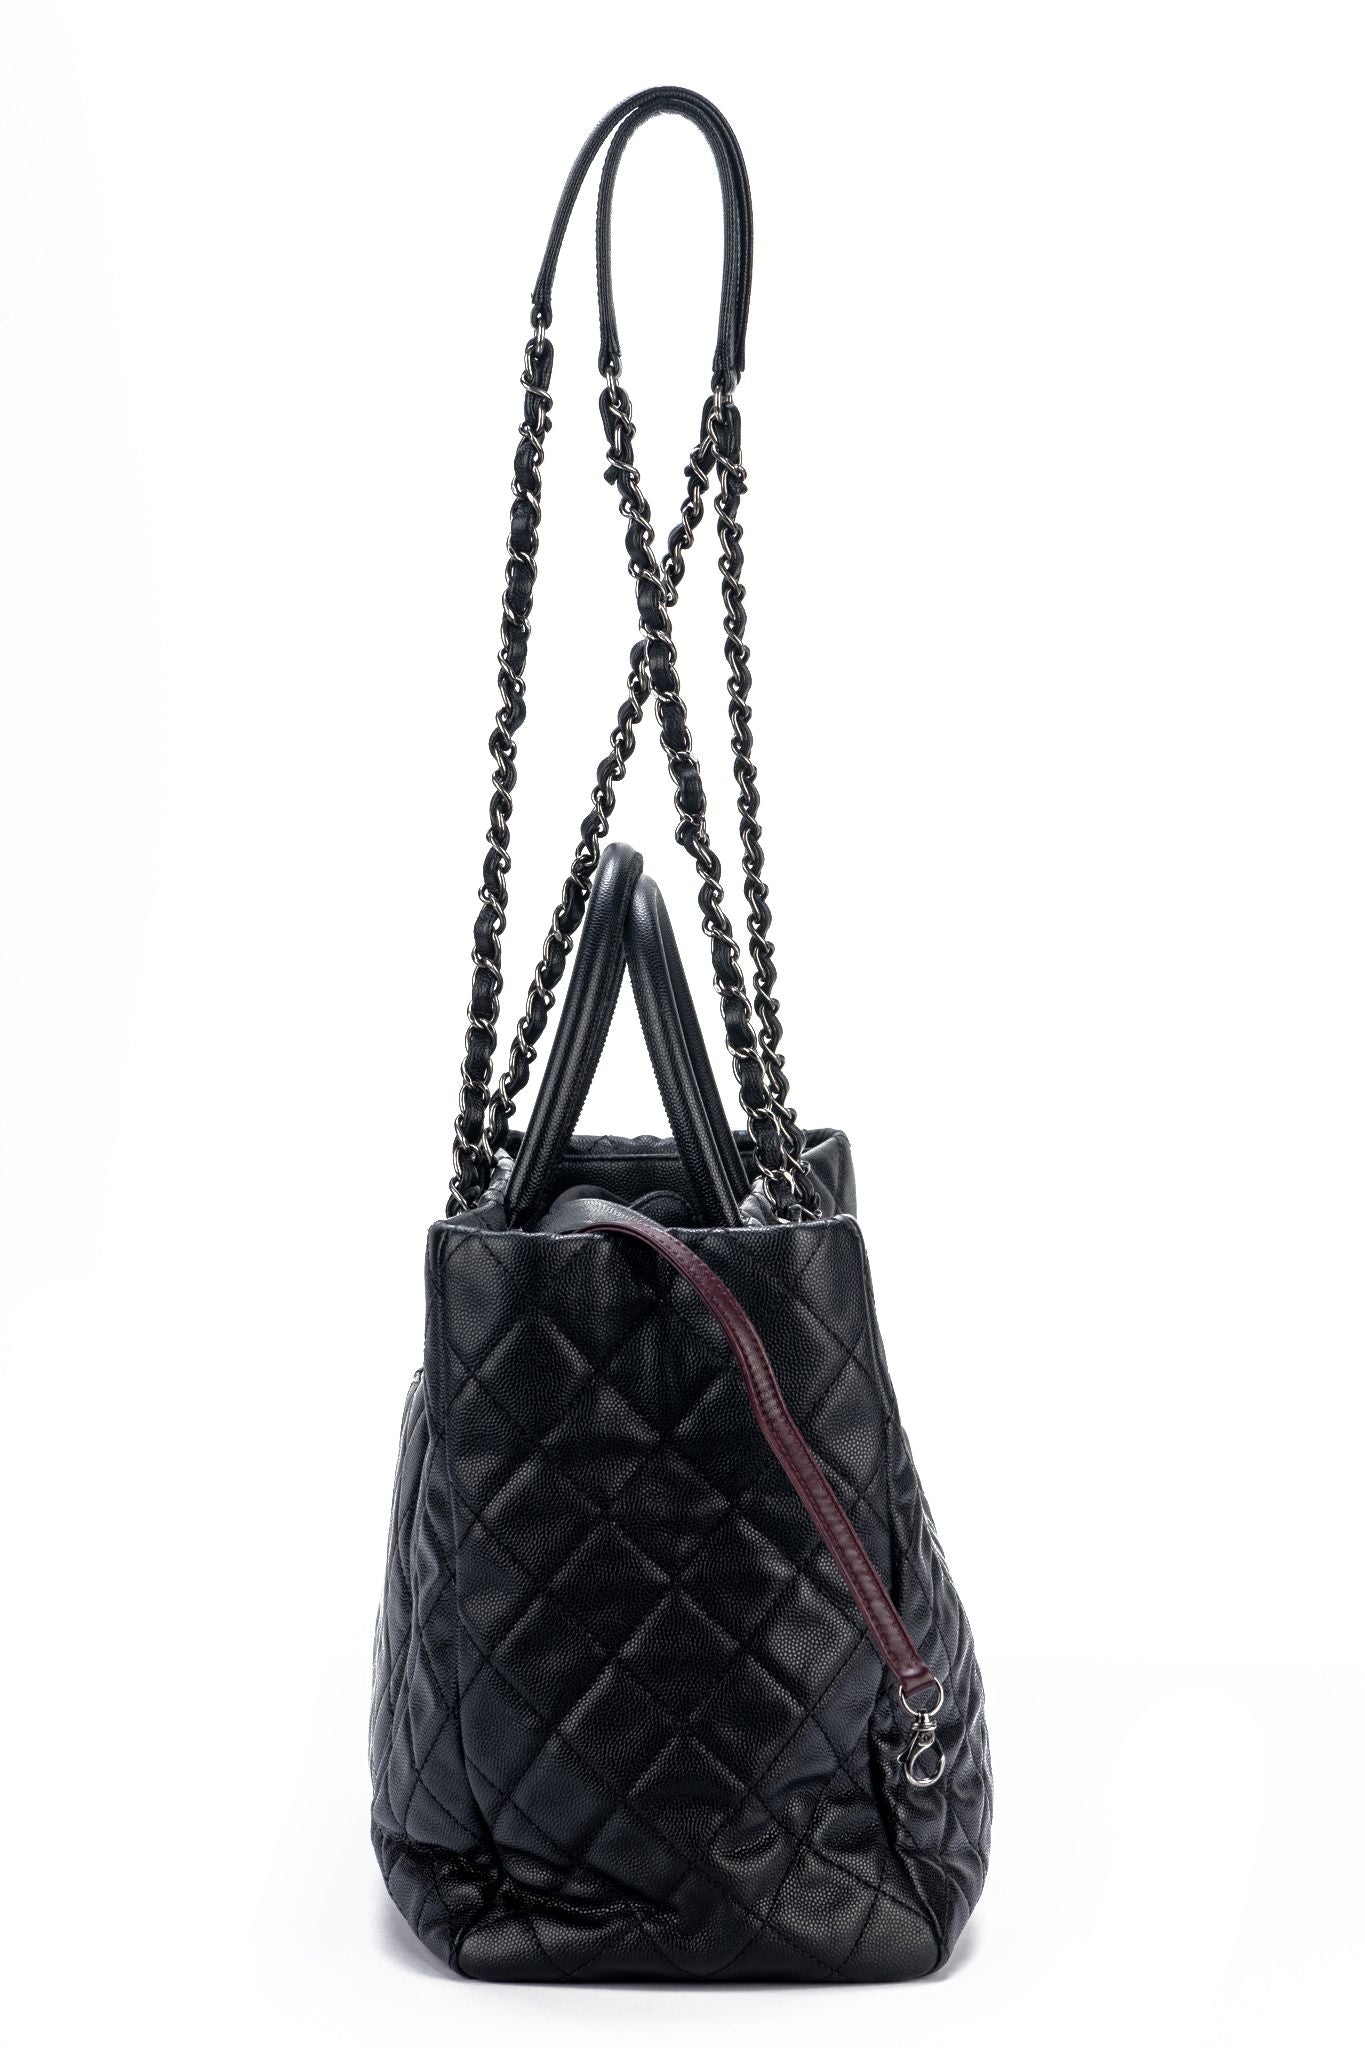 Chanel Black Lambskin Chain Me Tote Bag Chanel